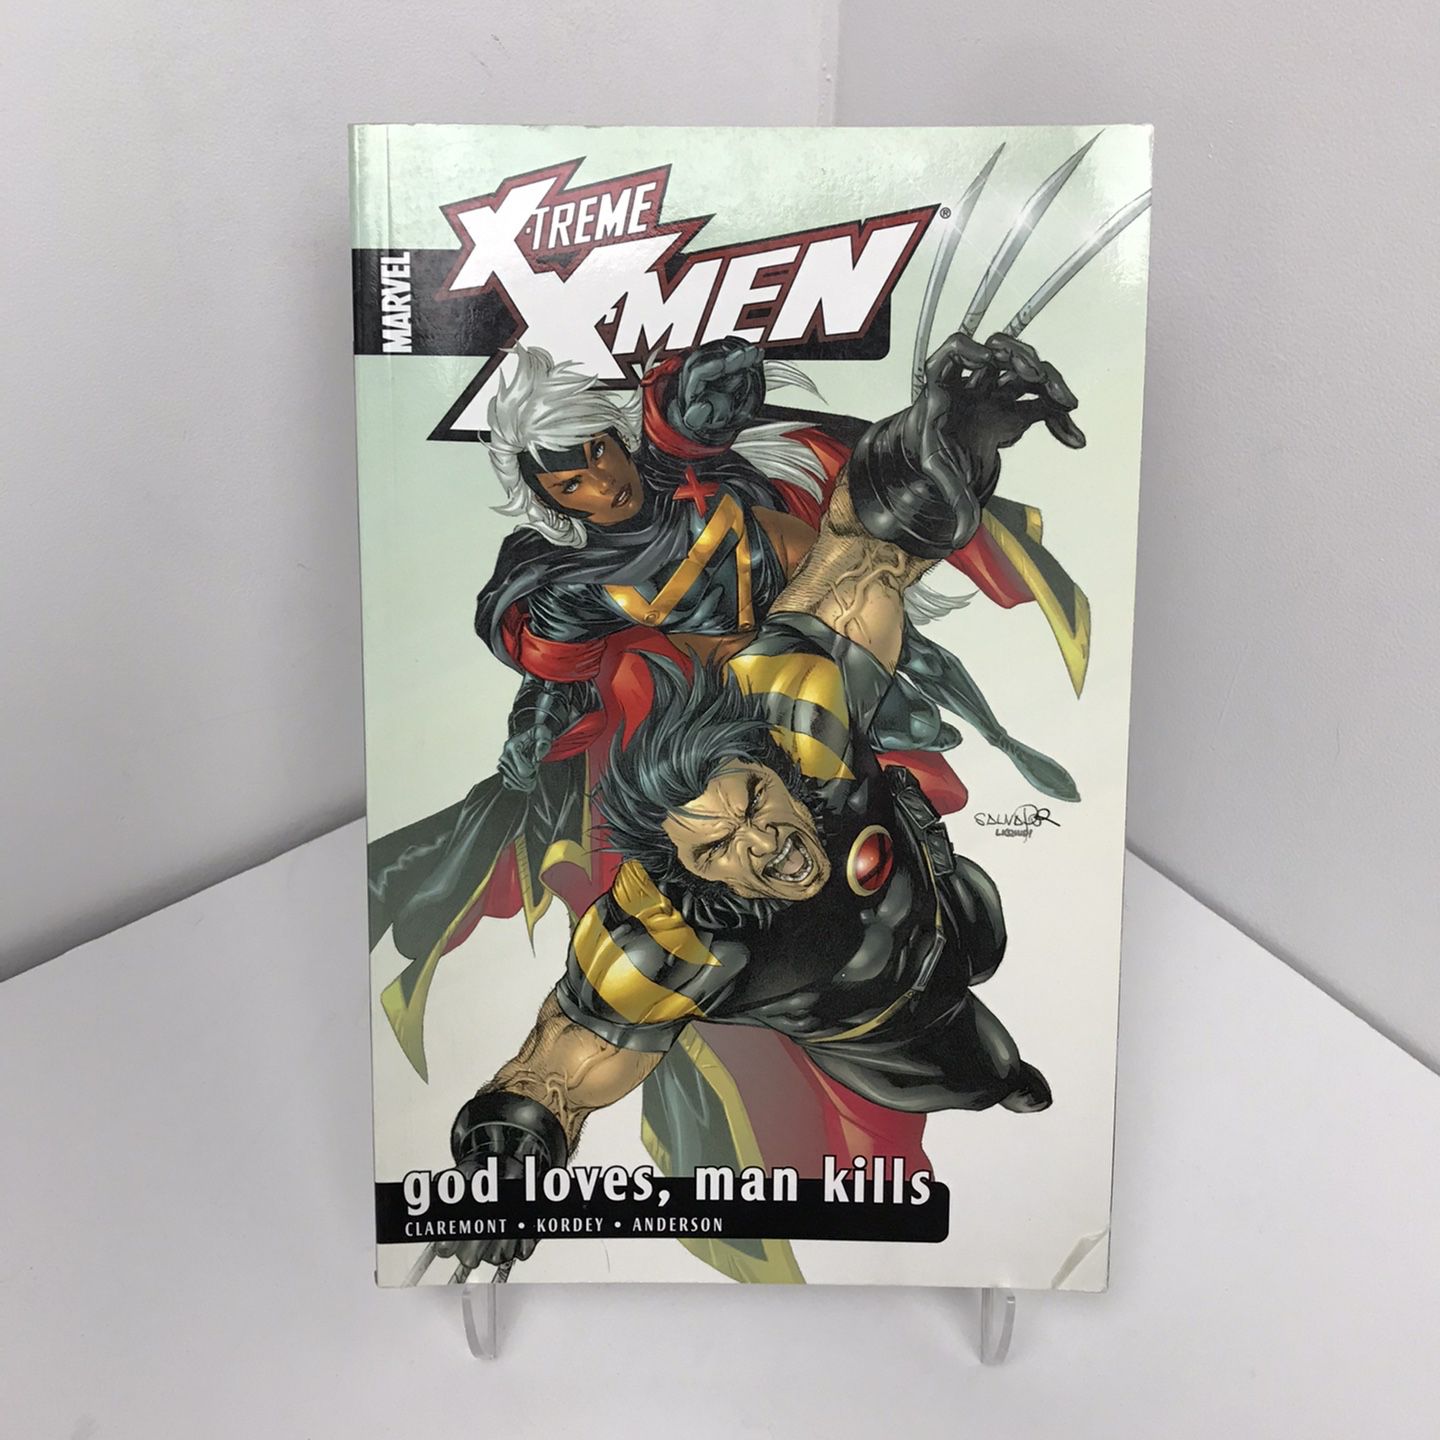 Xtreme X-men “god loves, men kills” Comic Book